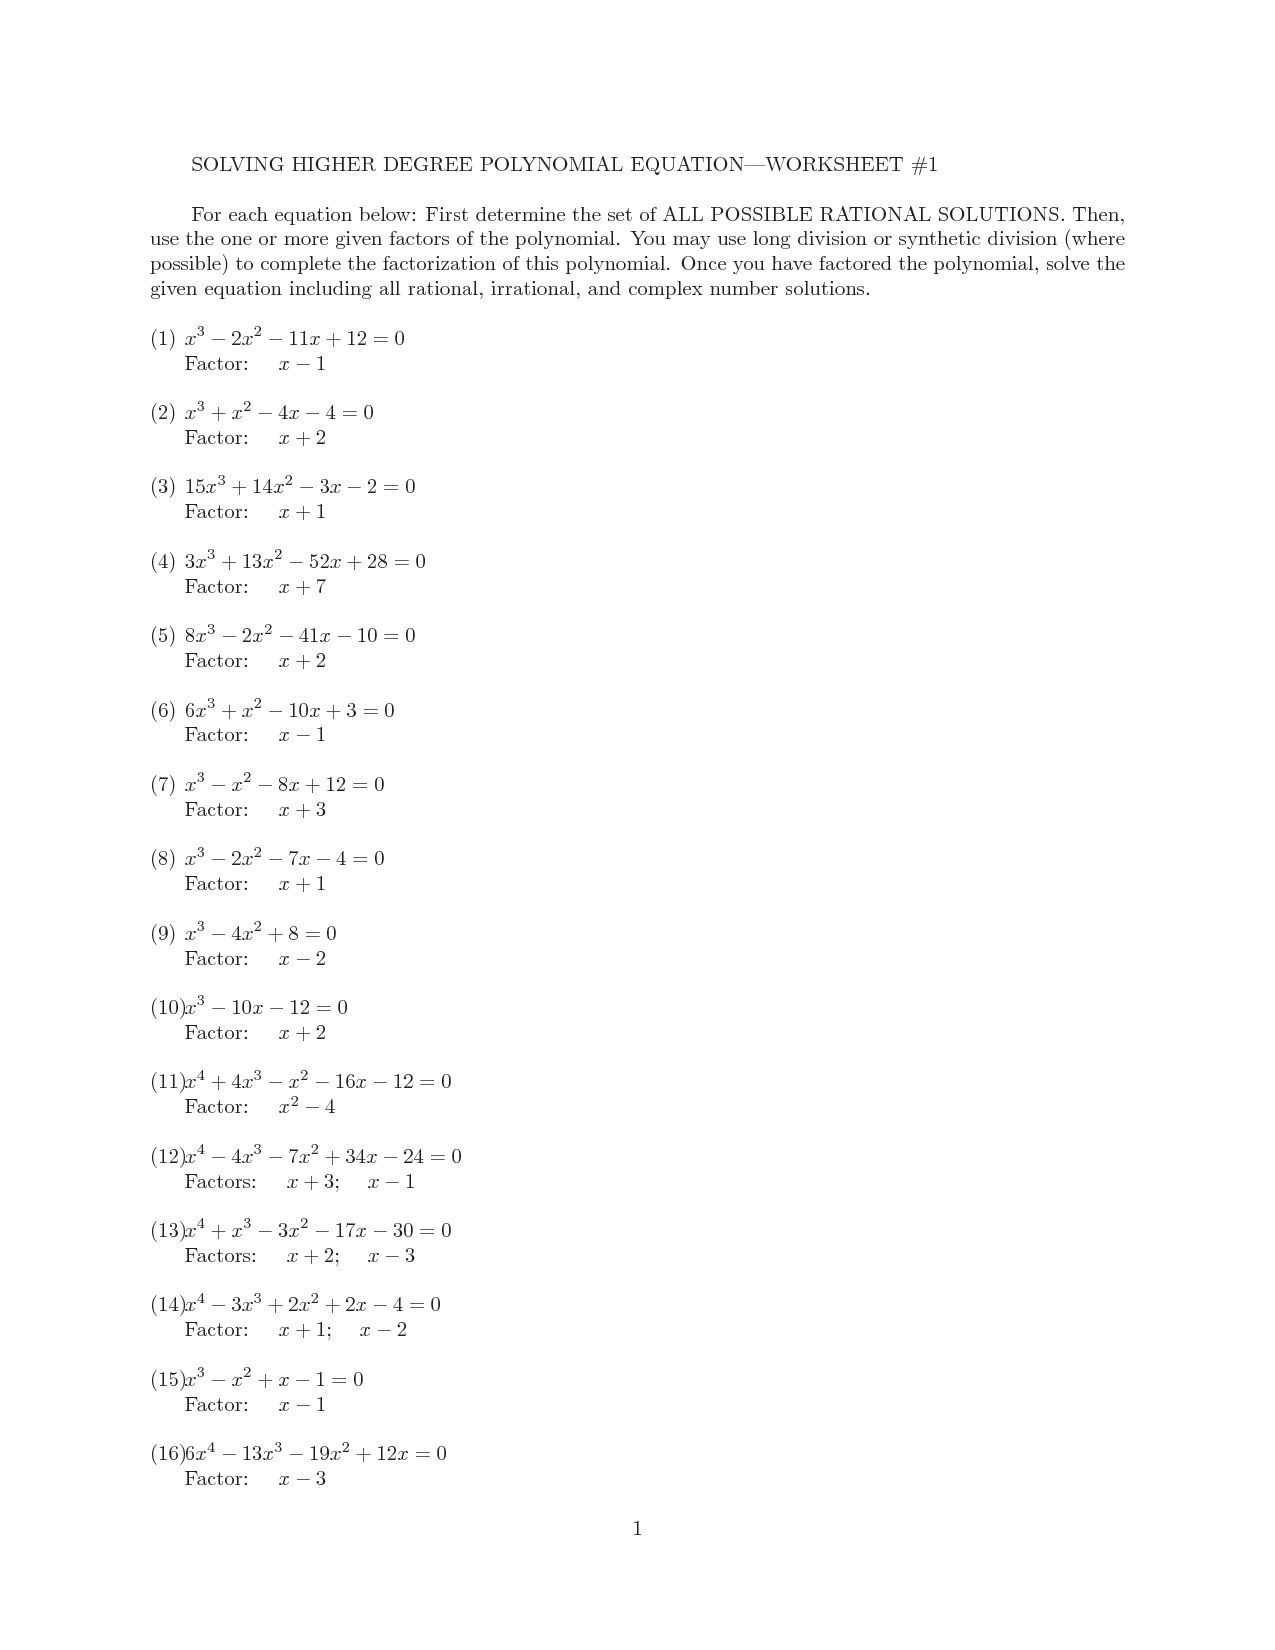 Solving Polynomials Worksheet Image